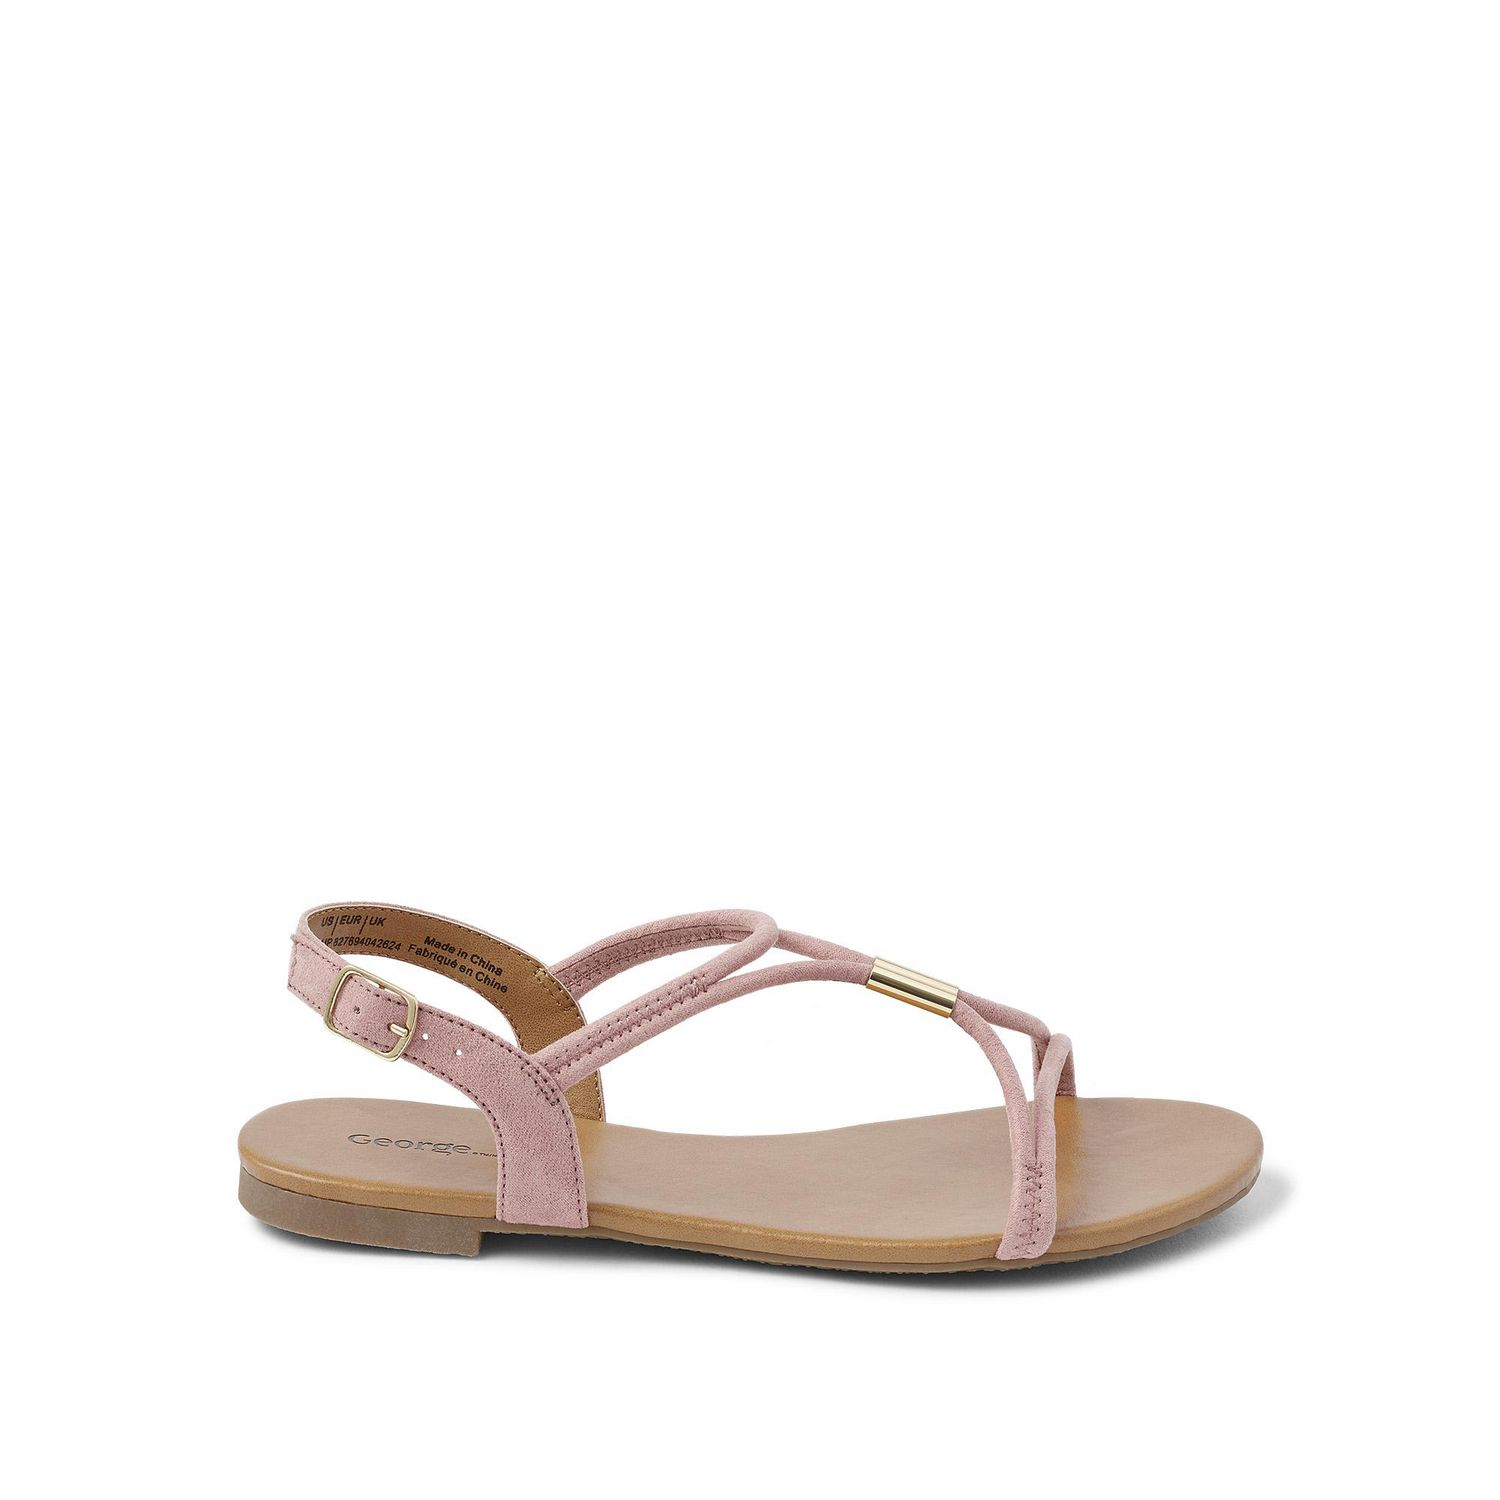 George Women's Alba Metallic Sandals | Walmart Canada